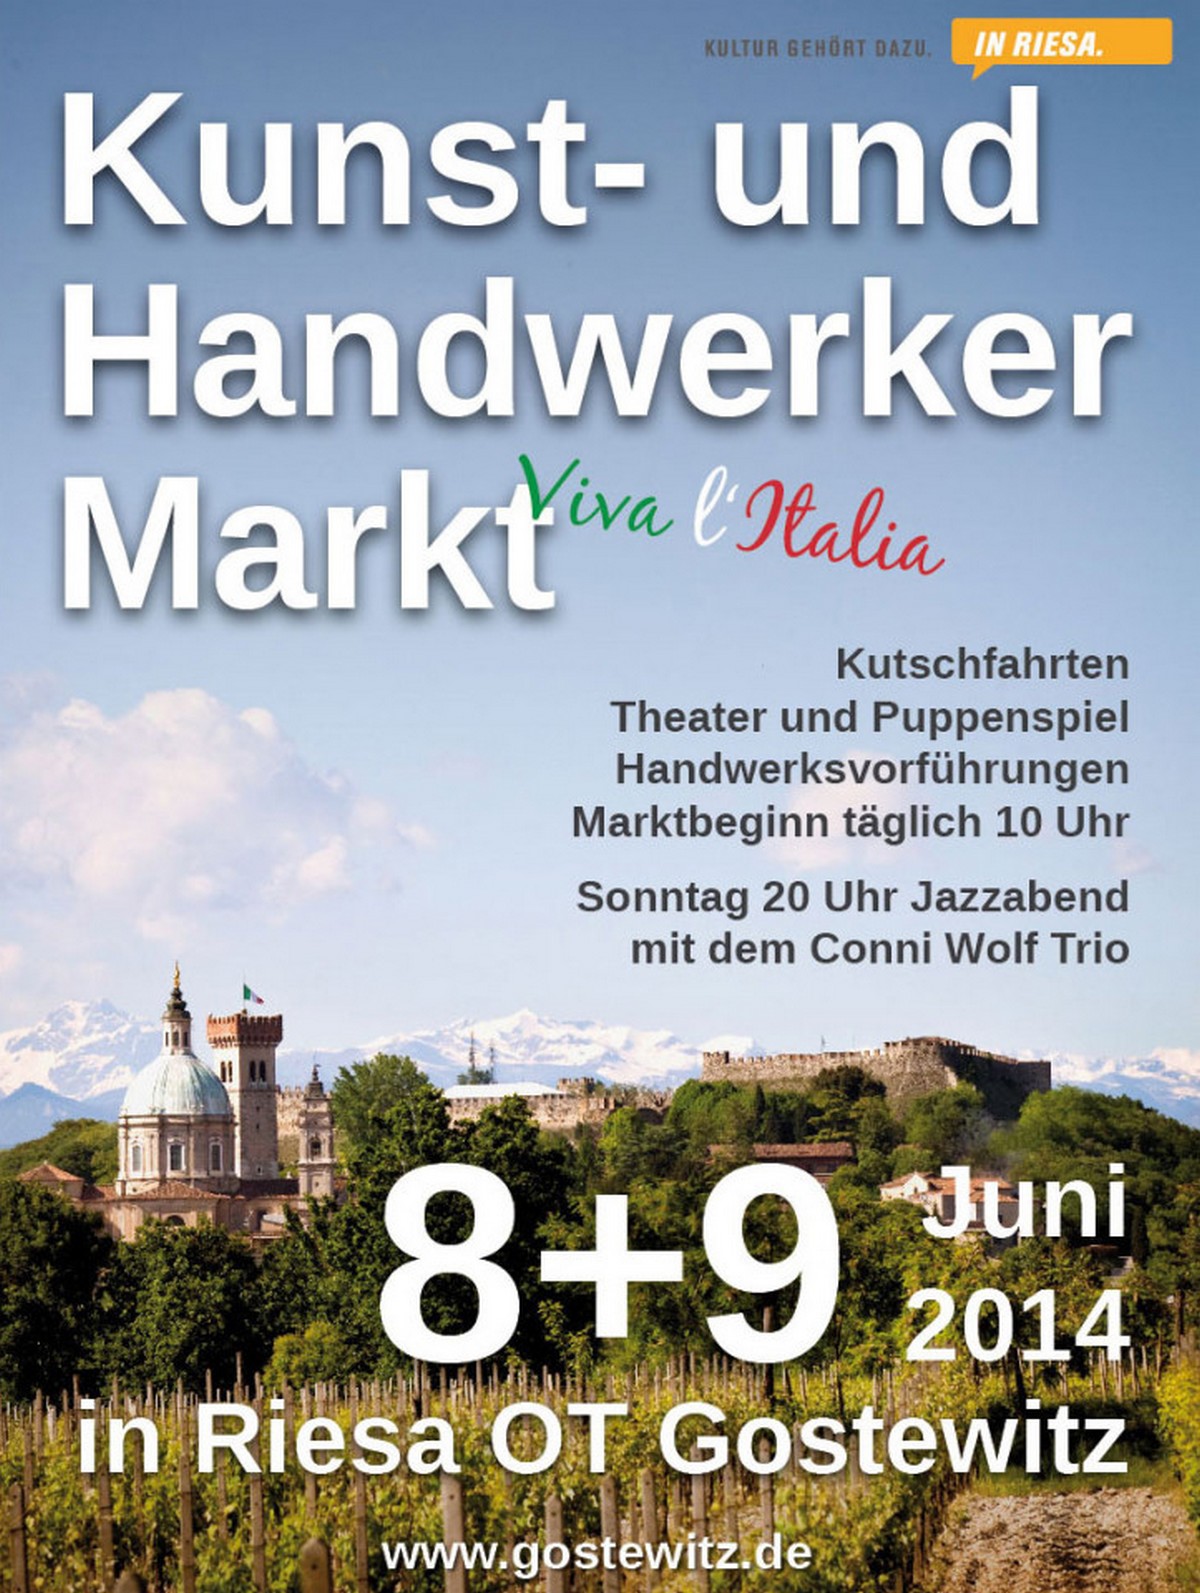 http://www.riesa-lokal.de/wp-content/uploads/2014/06/00000952-Kunst-u.-Handwerkermarkt-in-Gostewitz-2014-I.jpg